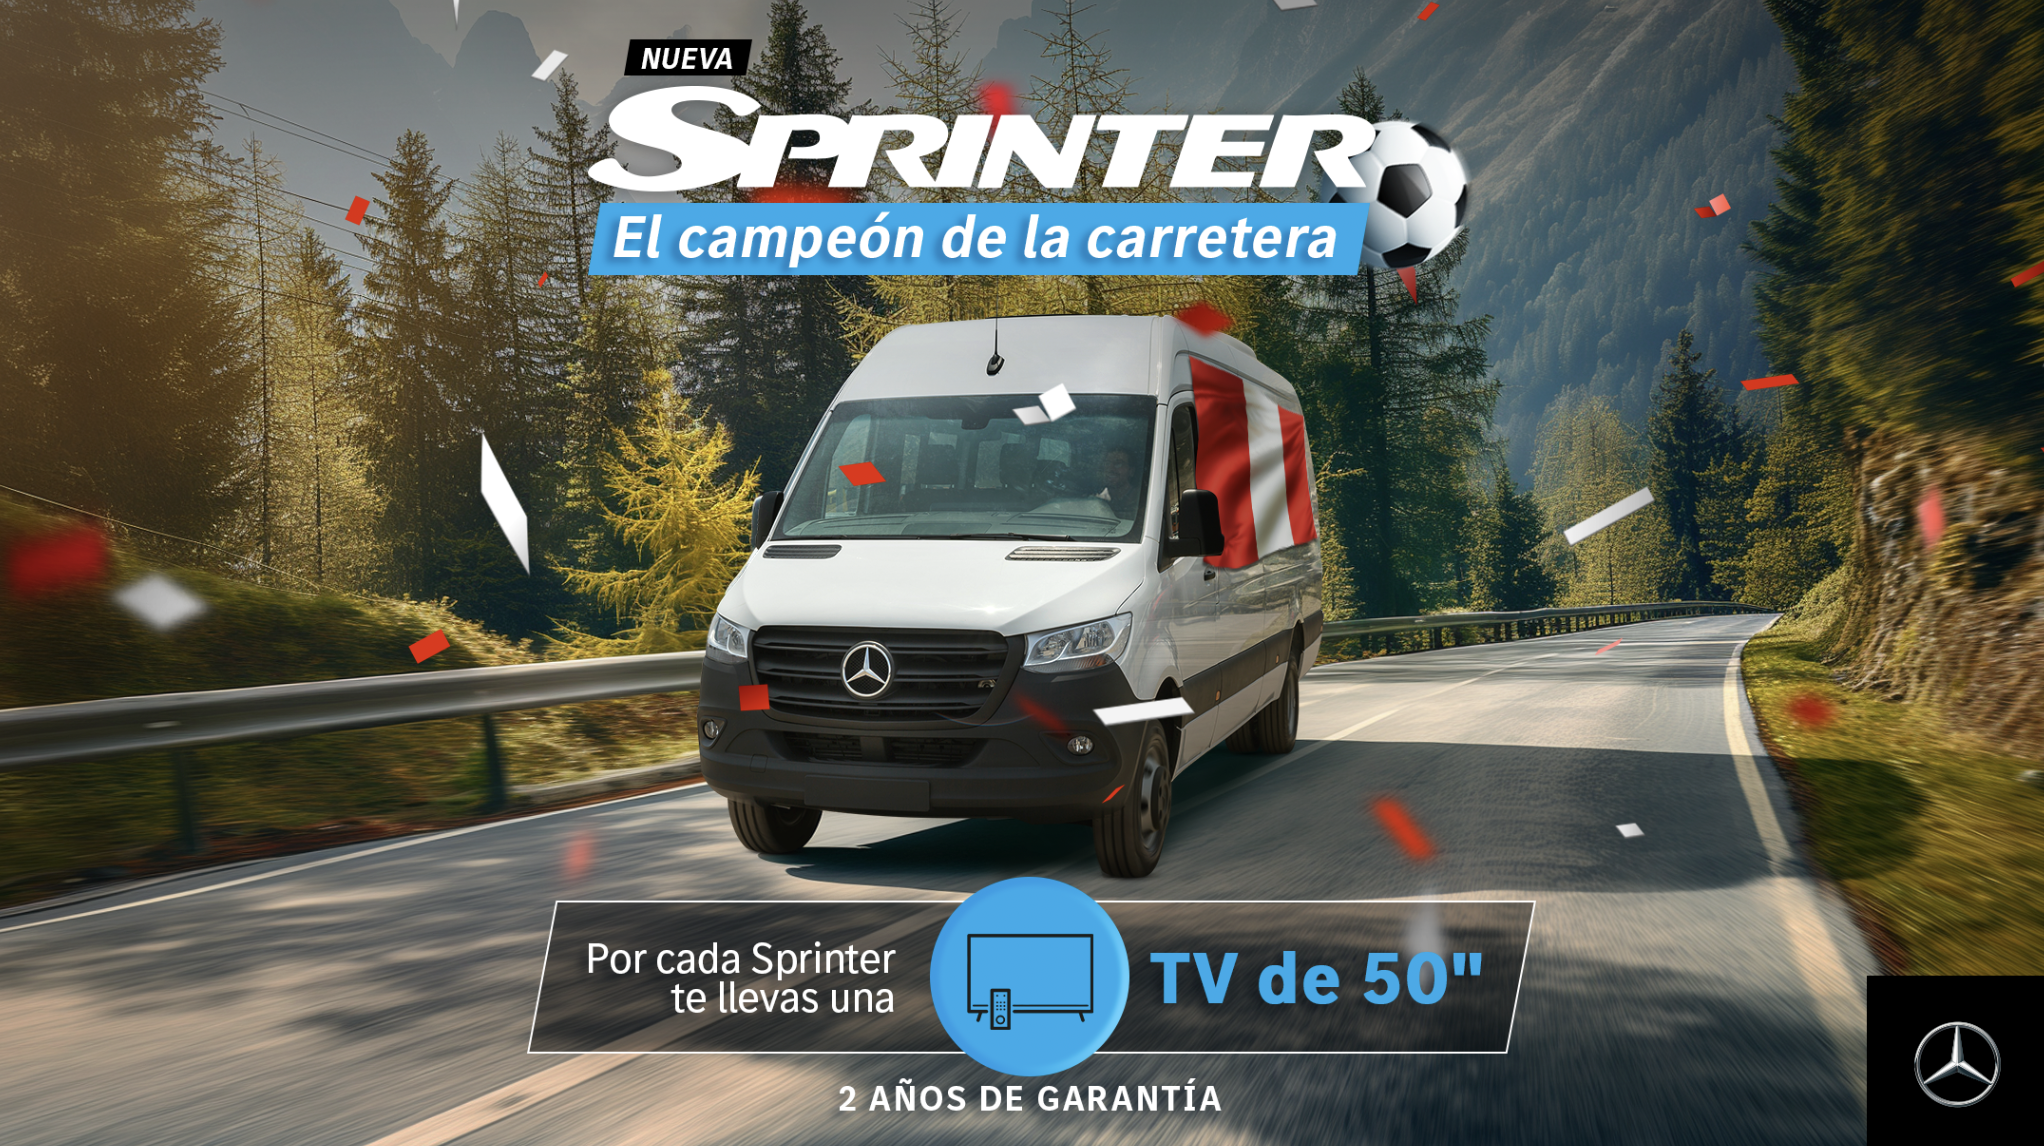 Sprinter promo Tv50